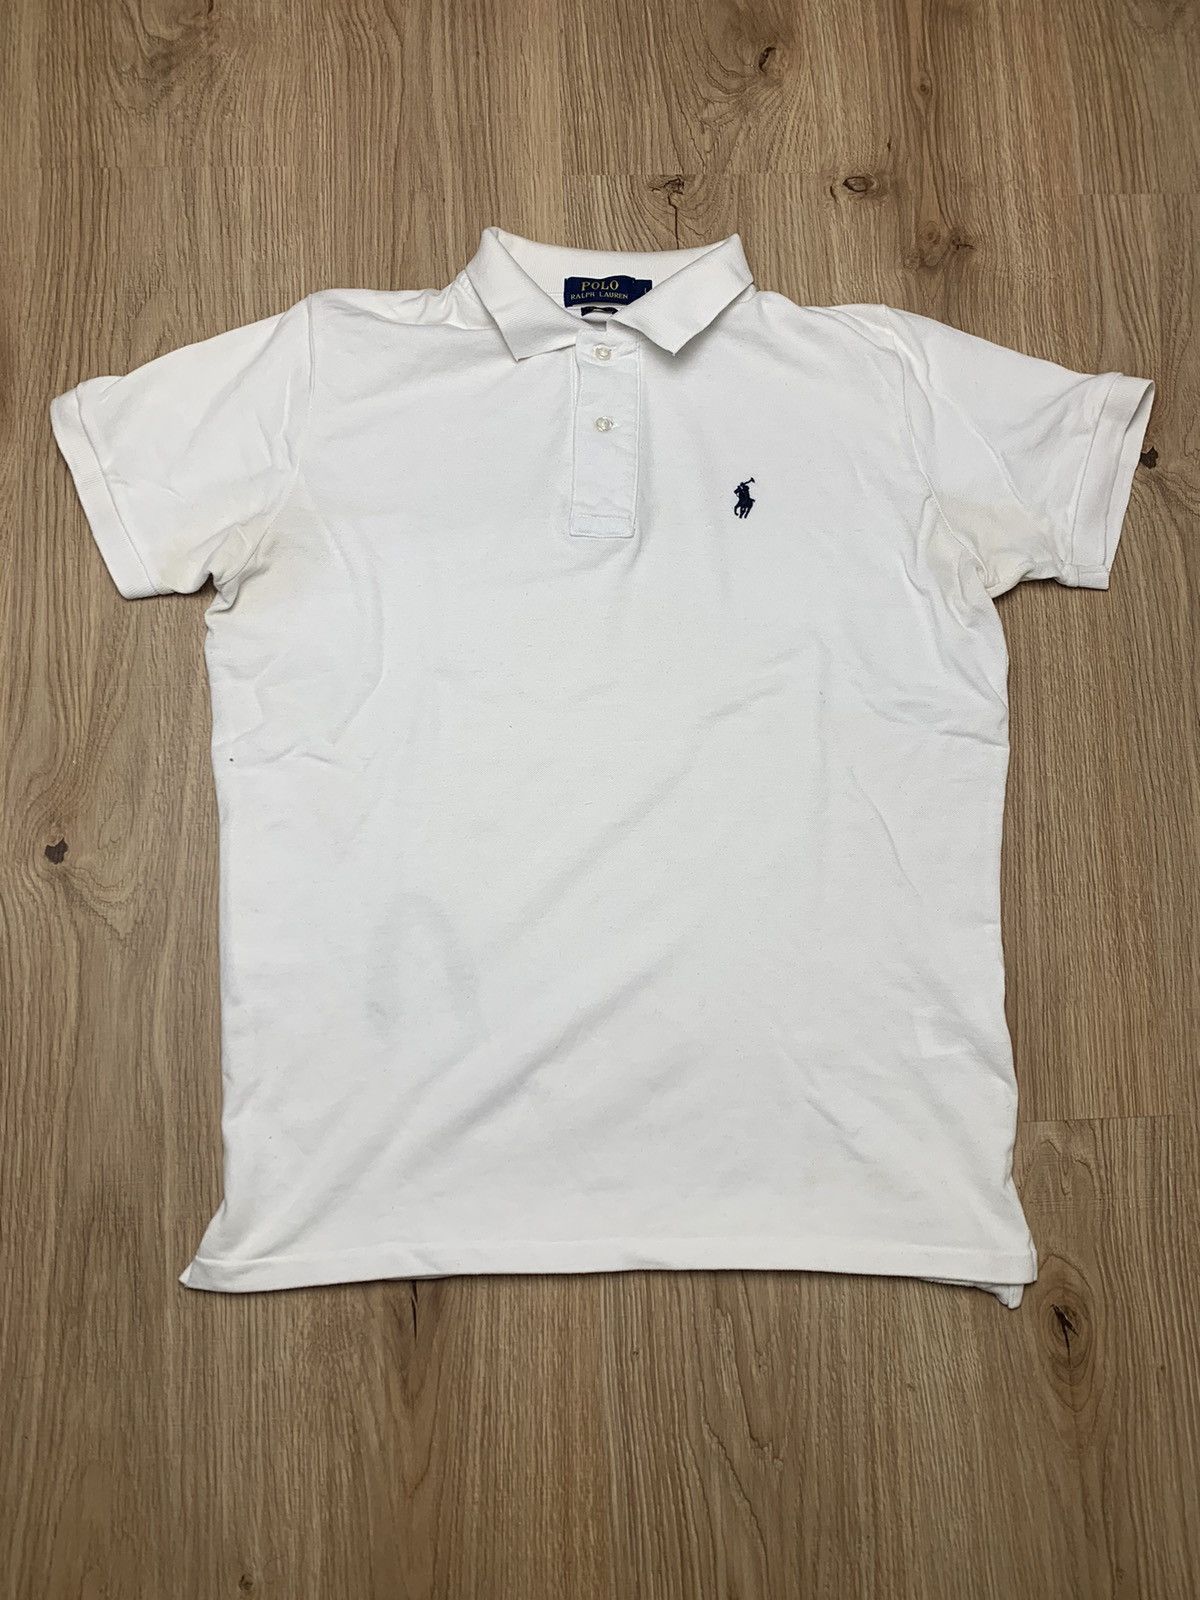 Ralph Lauren White Polo shirt Ralph Laurel | Grailed